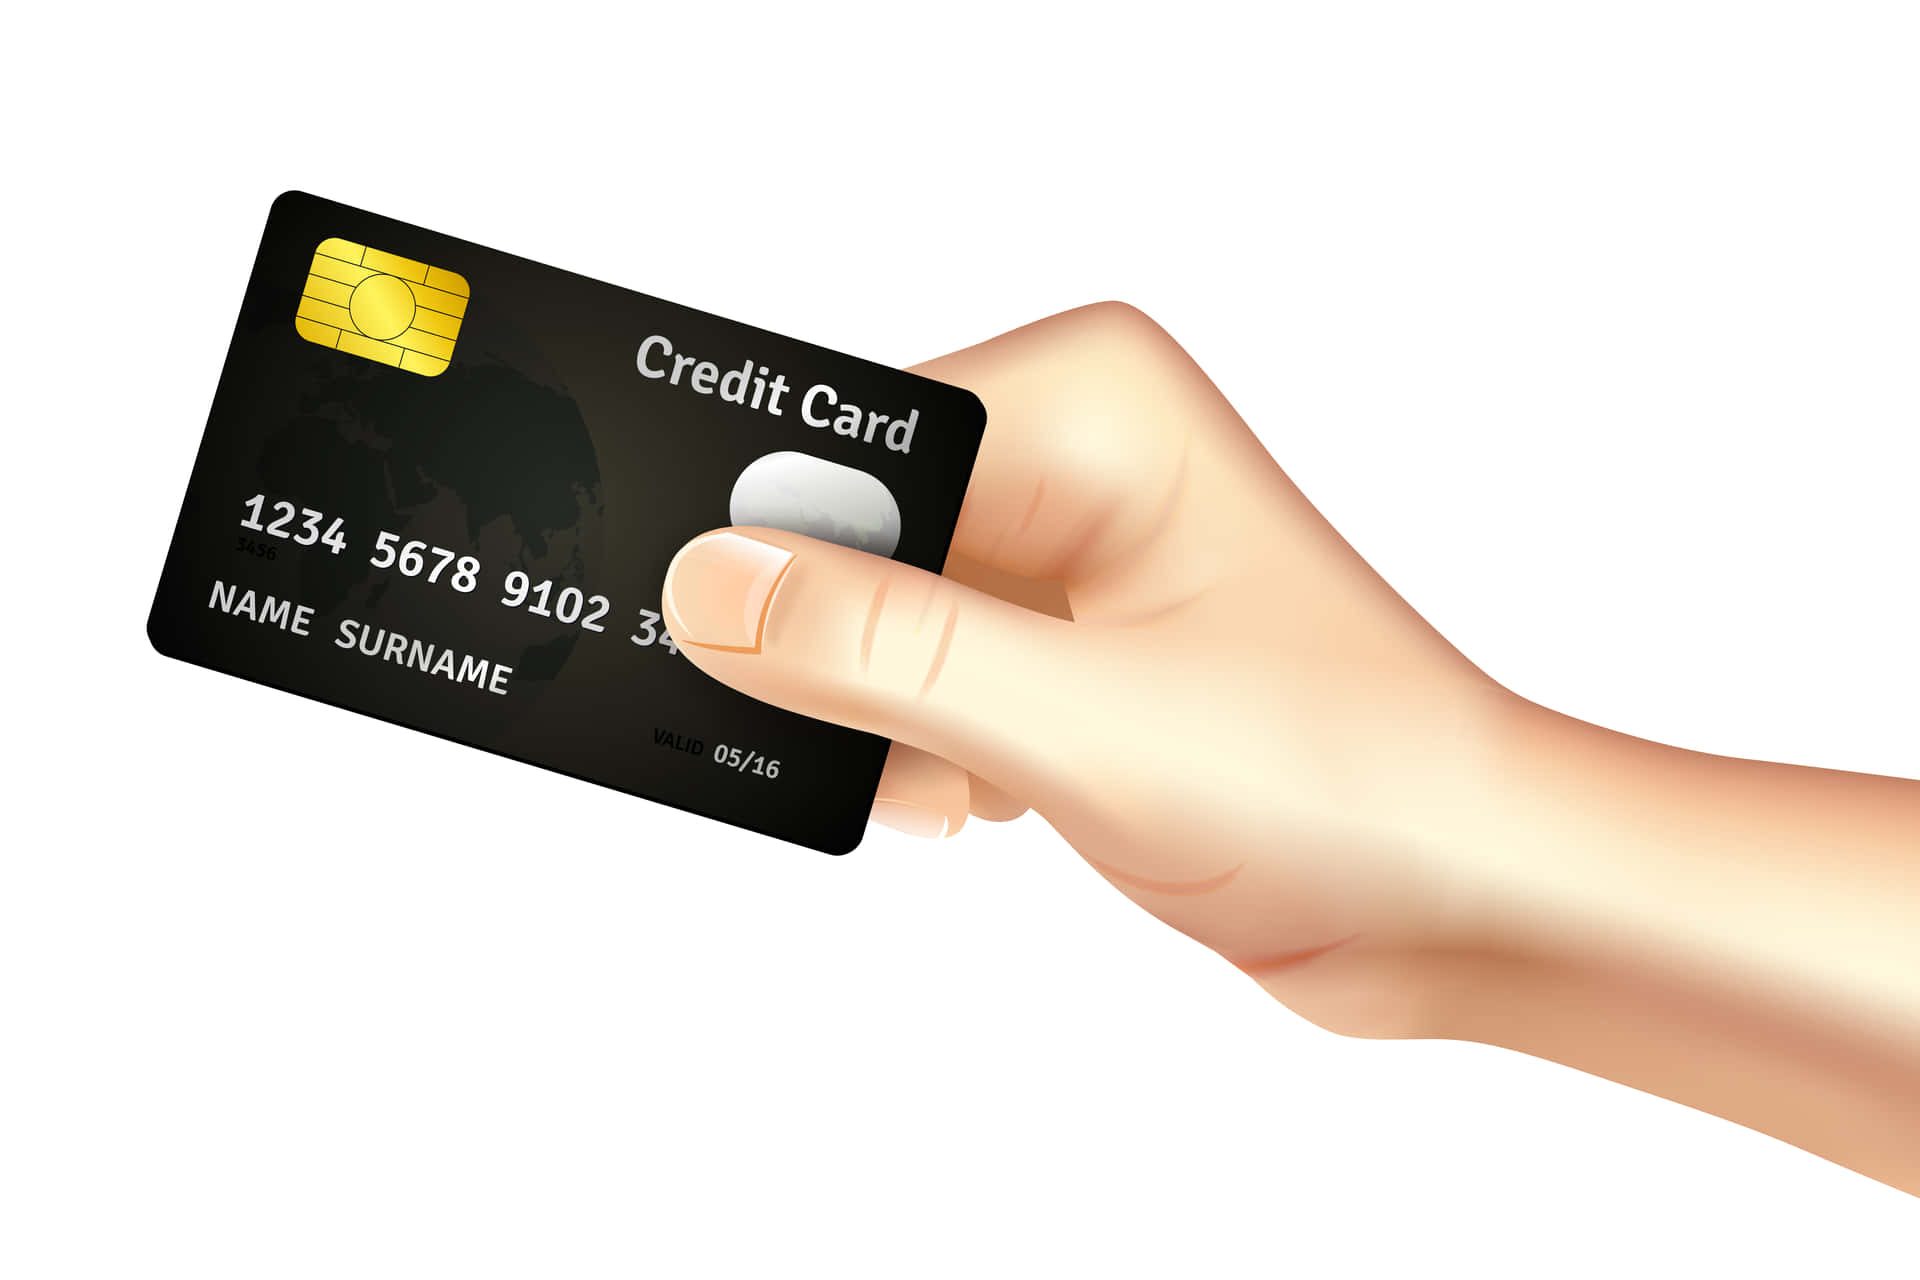 Enhand Som Håller Ett Kreditkort På En Vit Bakgrund